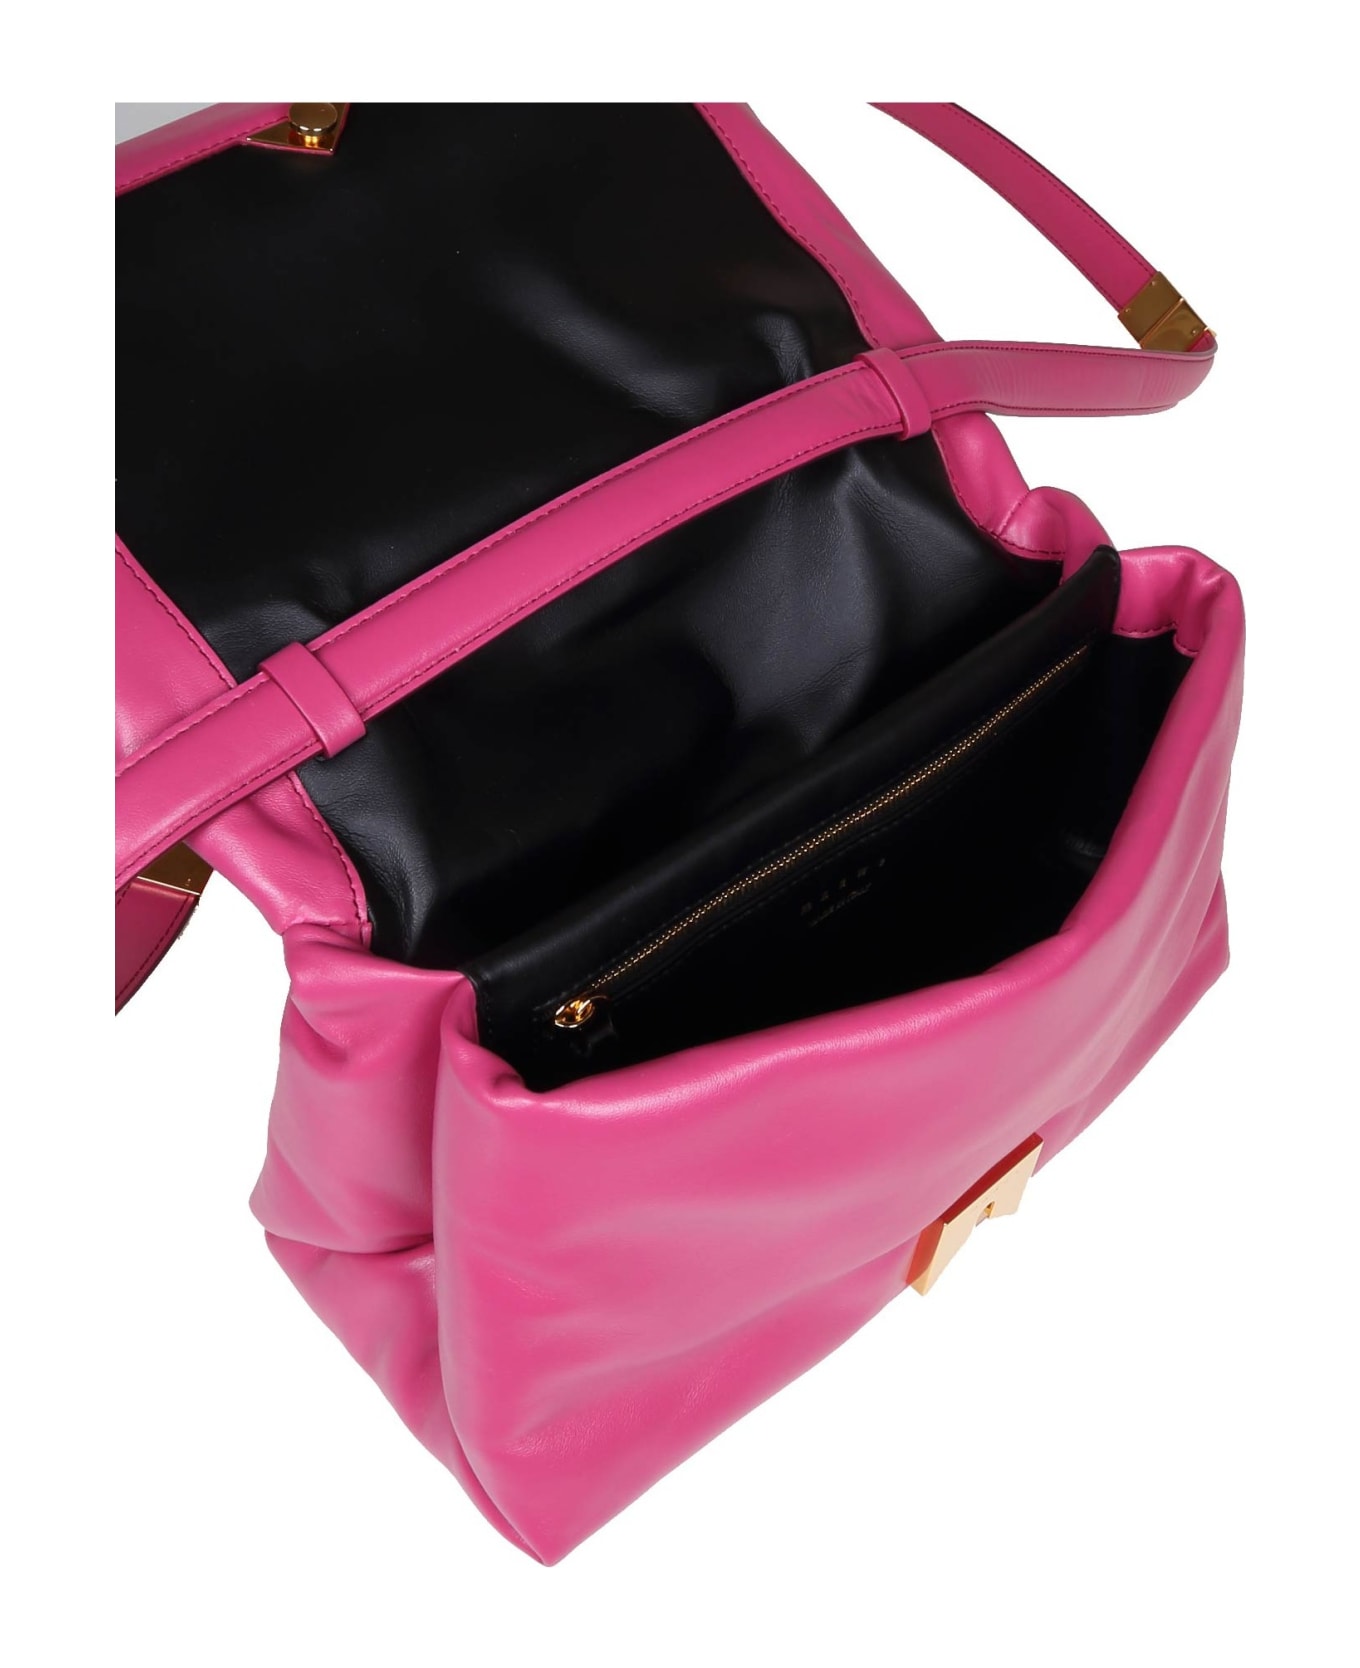 Marni Prisma Shoulder Bag In Fuchsia Color Leather - PINK